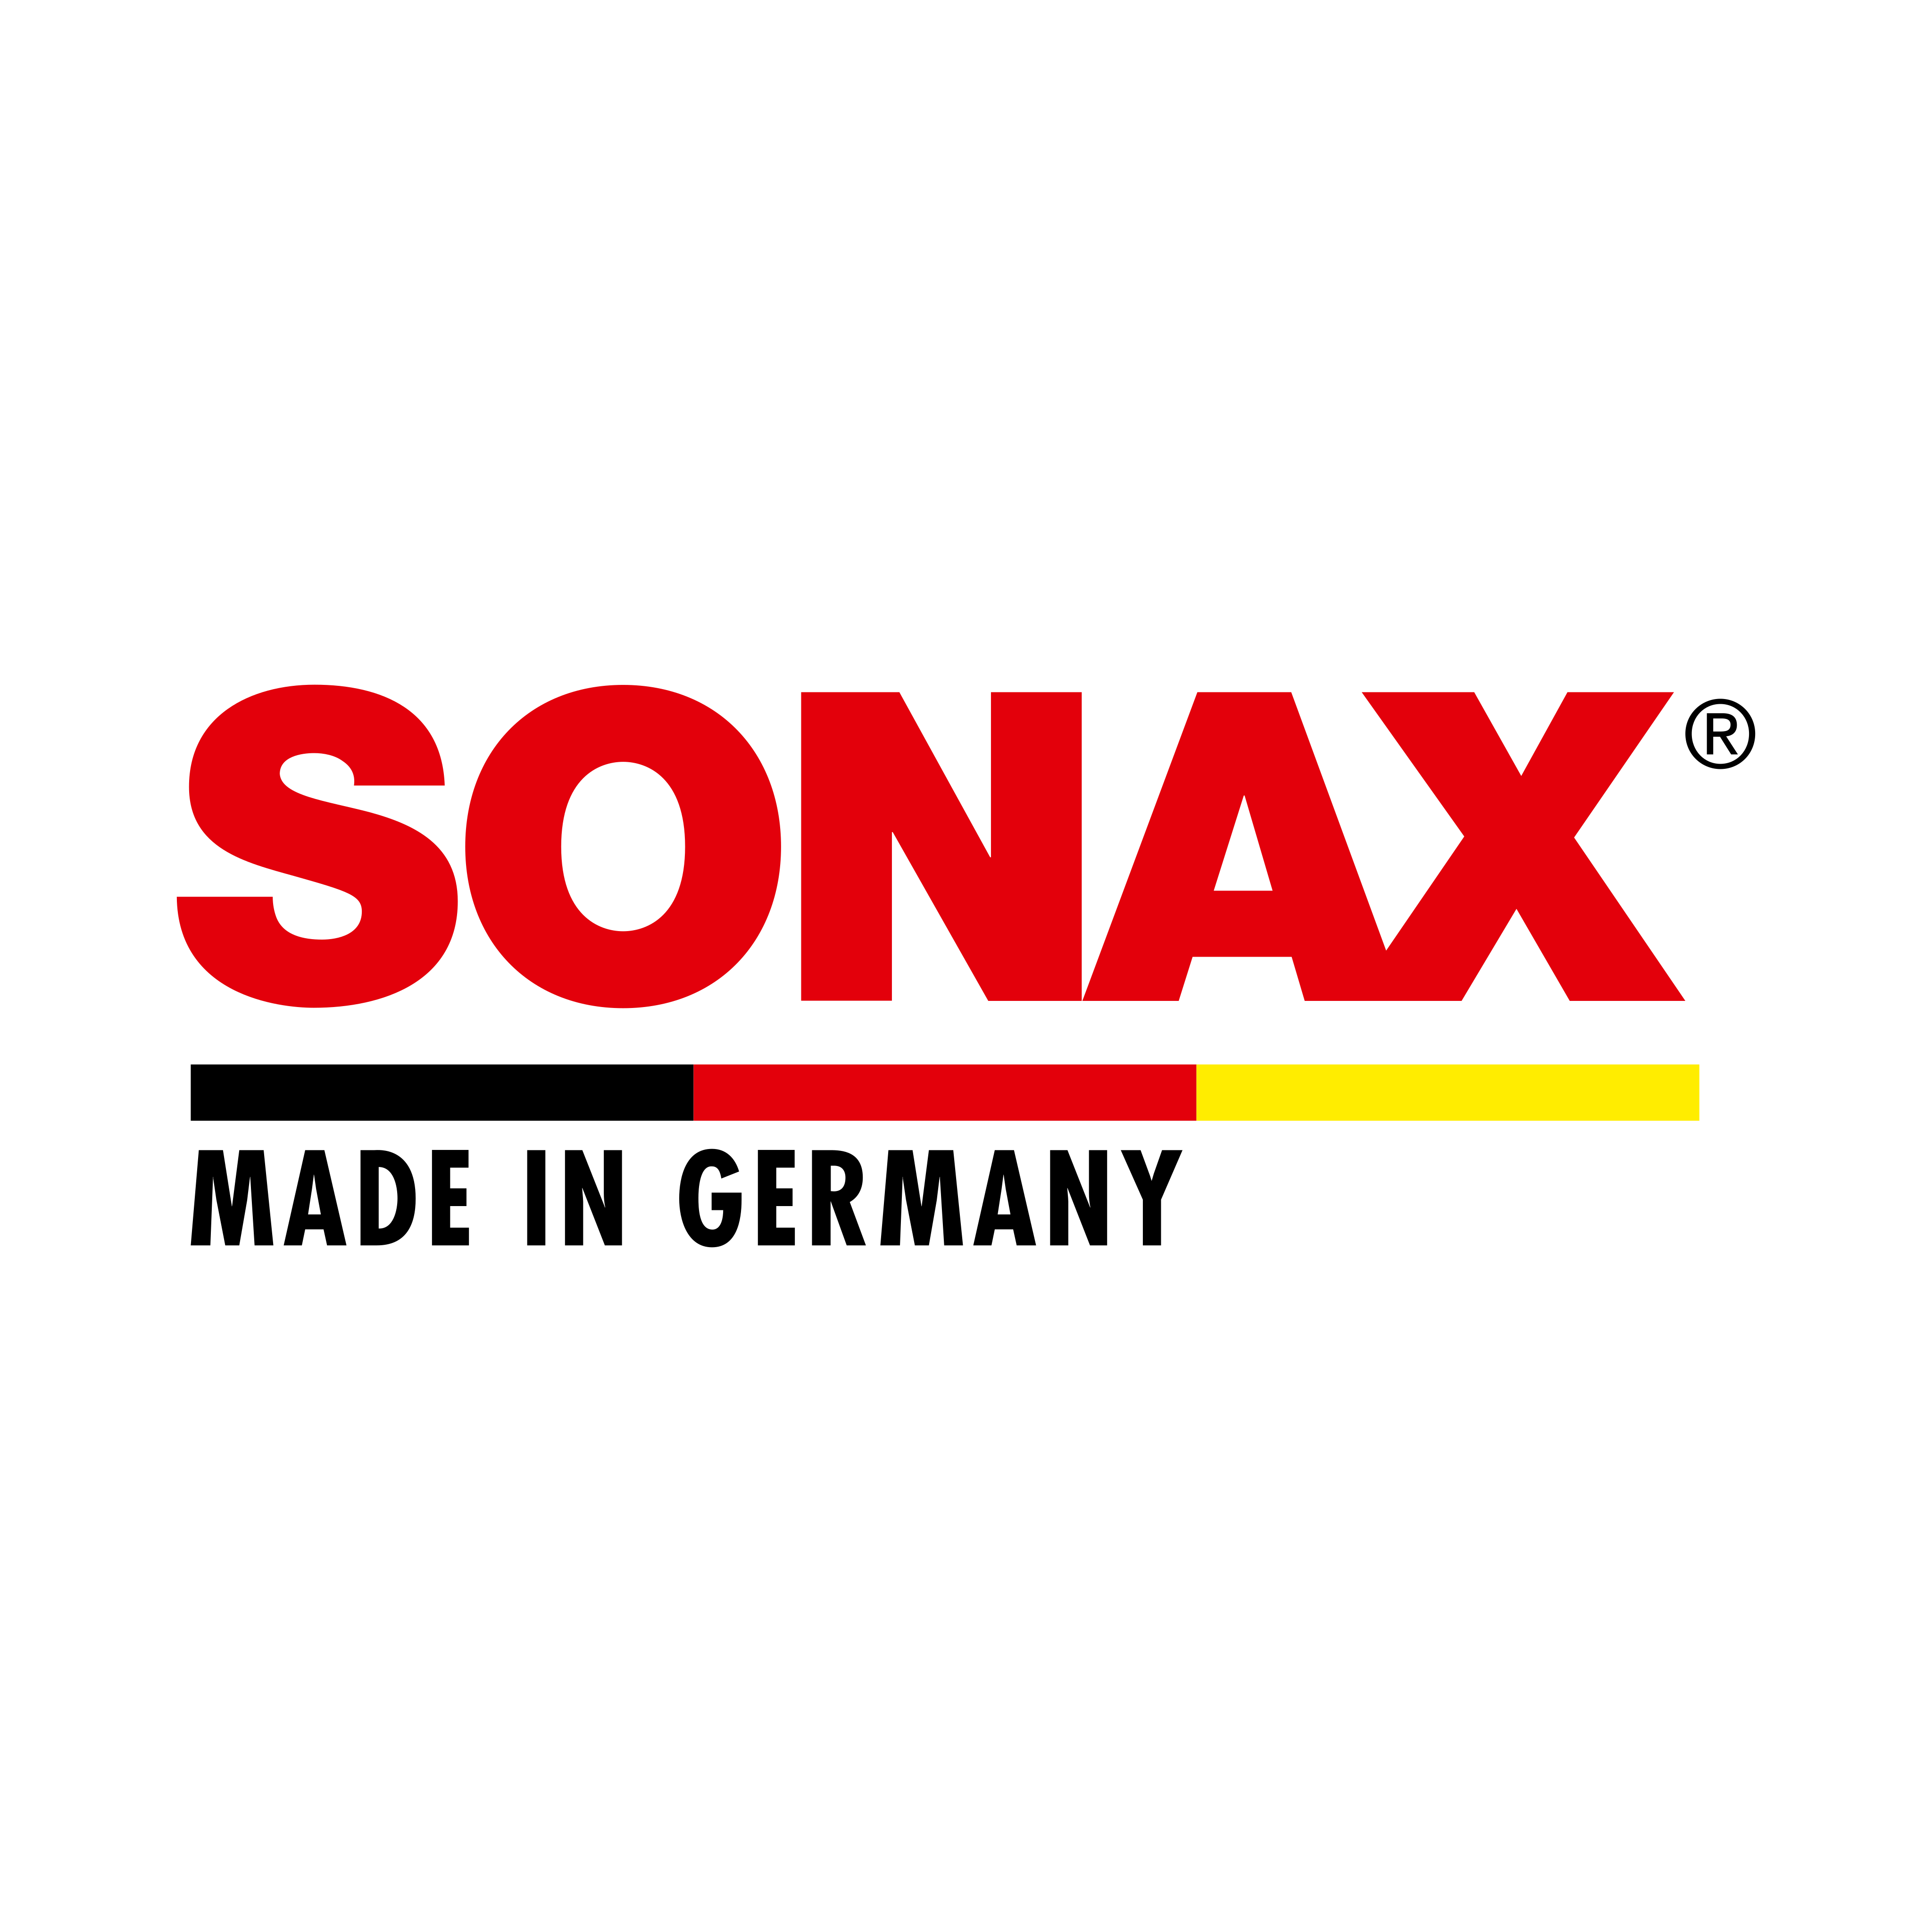 sonax logo 0 - Sonax Logo